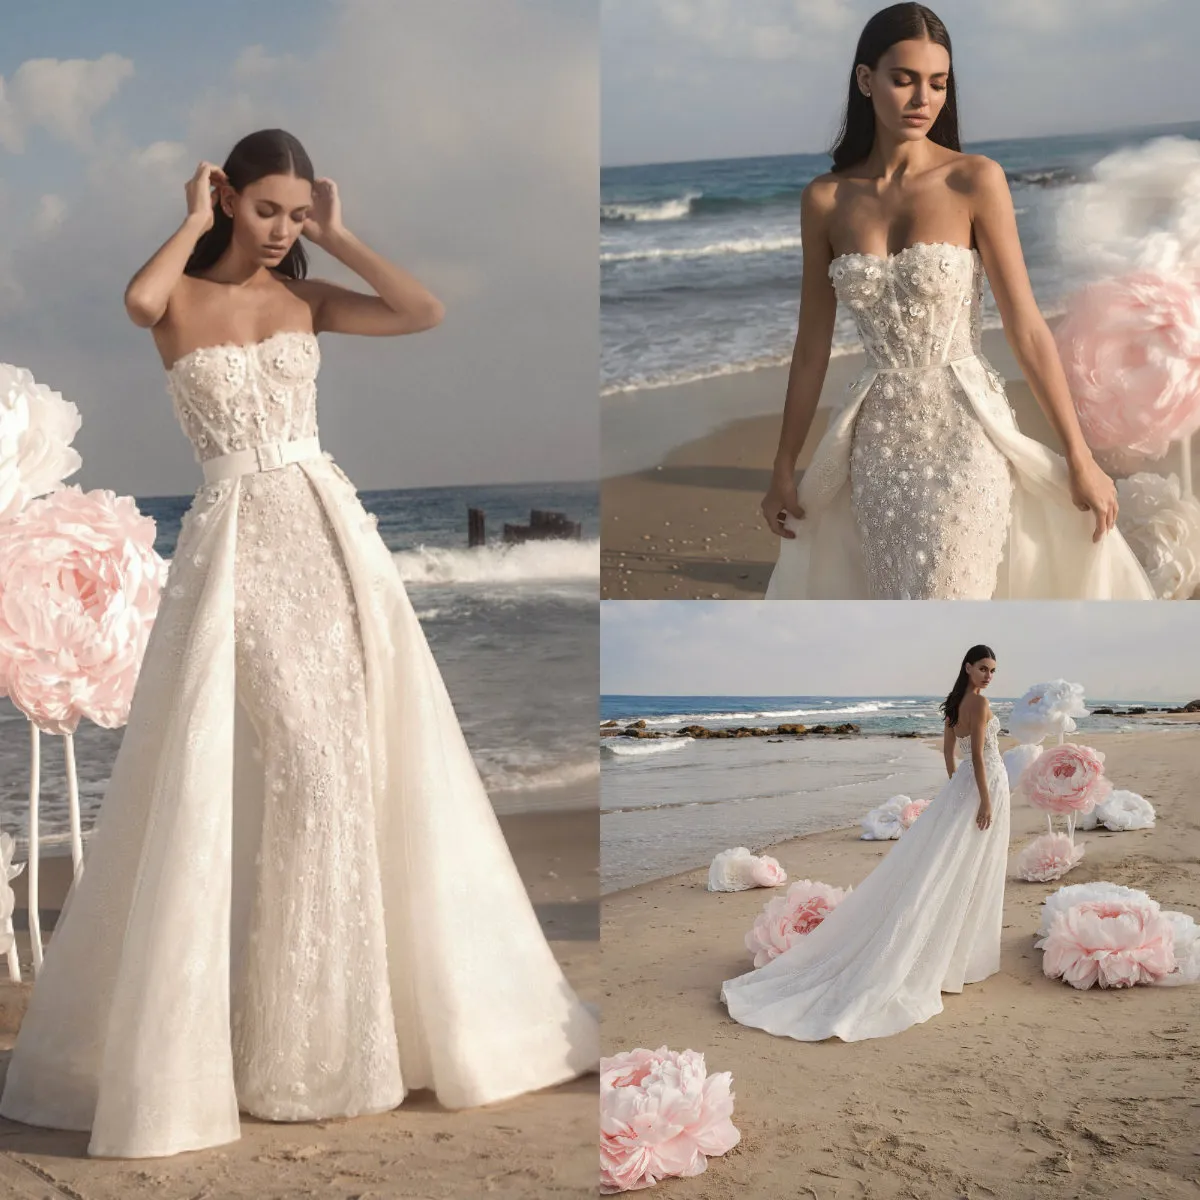 2019 Berta Sereia Vestidos De Noiva com Destacável Overskes Lace 3D Floral Applique Beads Beach Vestido de Noiva Vestito Da Spassa Vestido Bridal